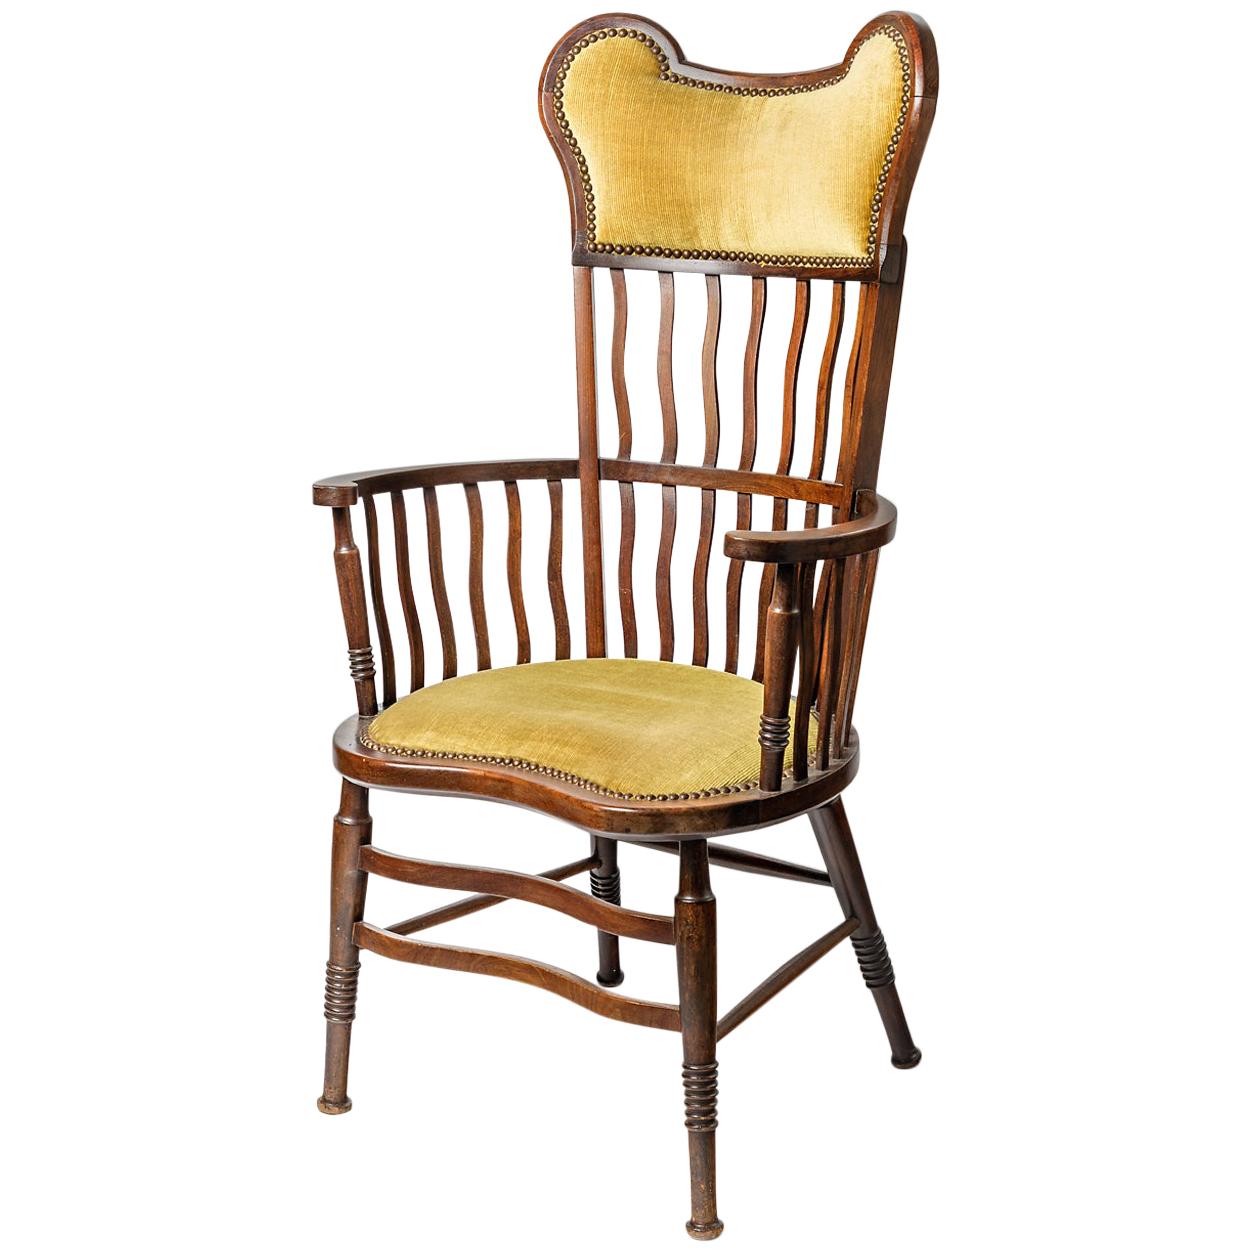 Elegant Arts & Crafts 1900 Sessel oder Stuhl Mid-20th Century Design Thonet